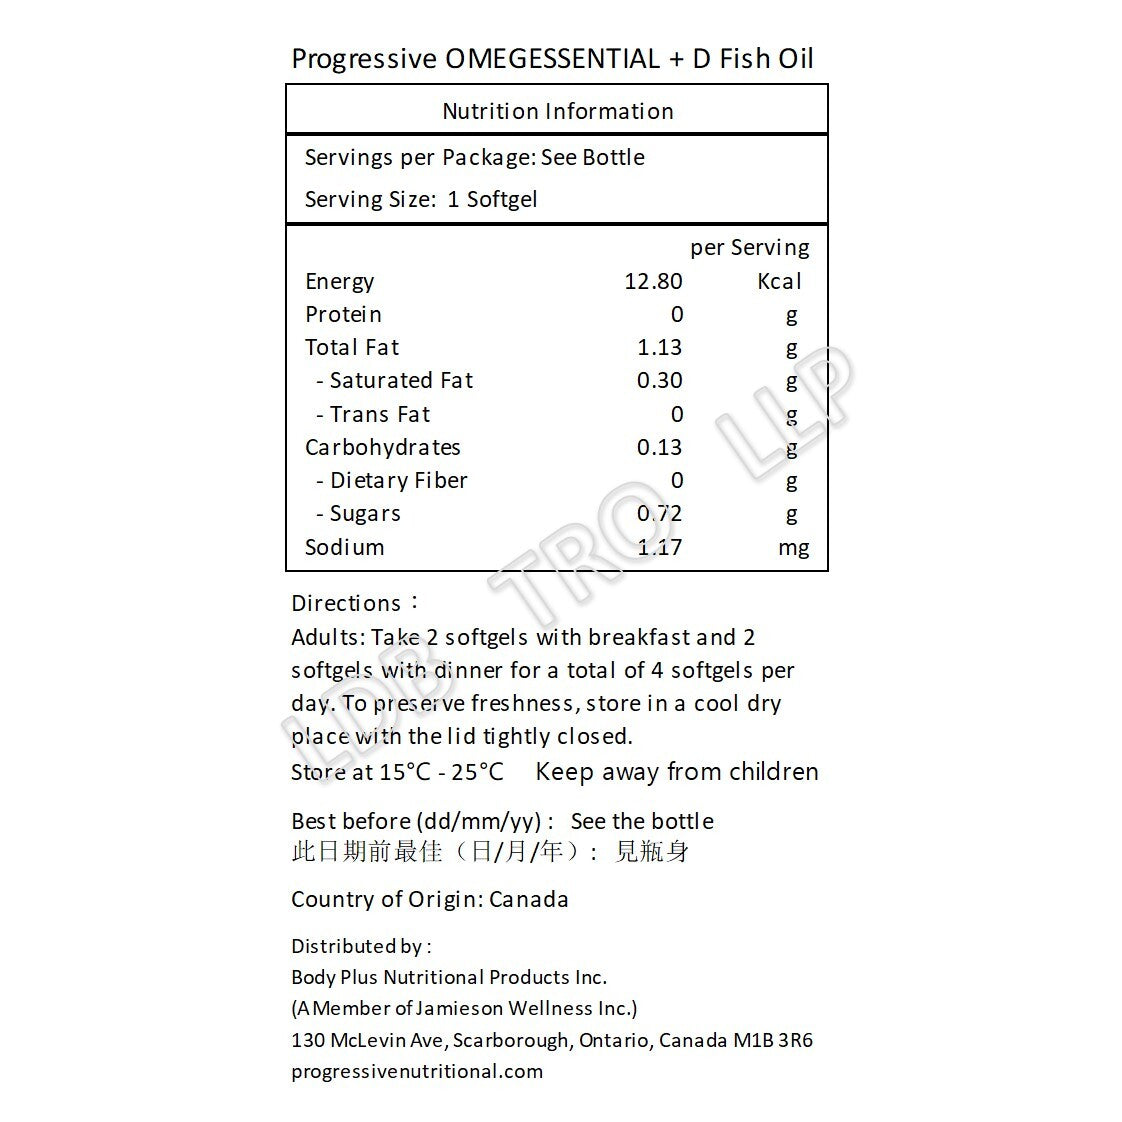 ProgressiveOmegEssential 高效特級濃縮魚油 +Ｄ(1552 毫克)120 粒